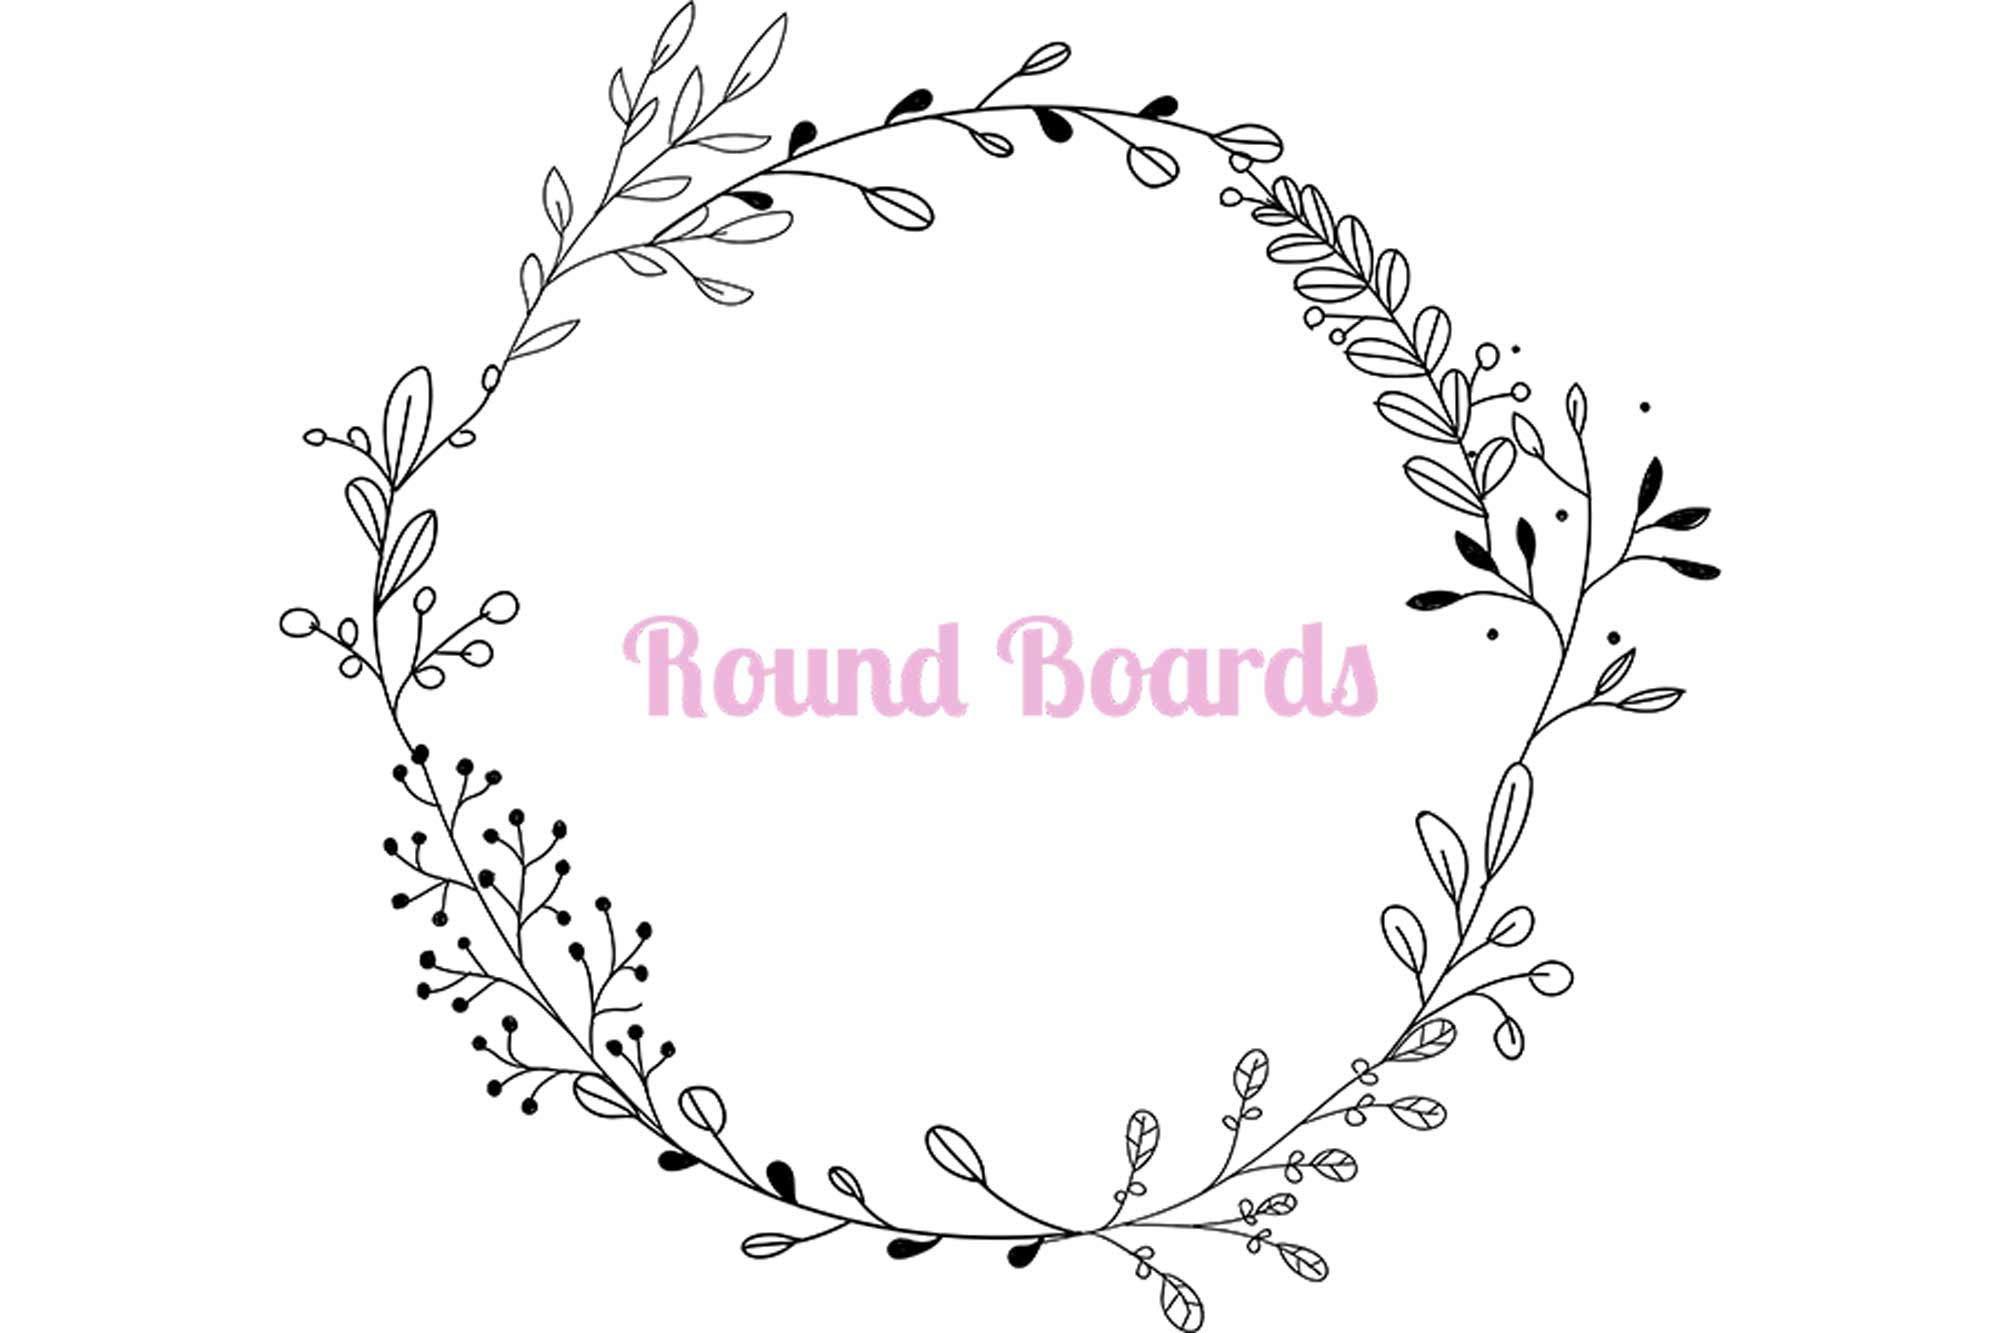 Round Boards